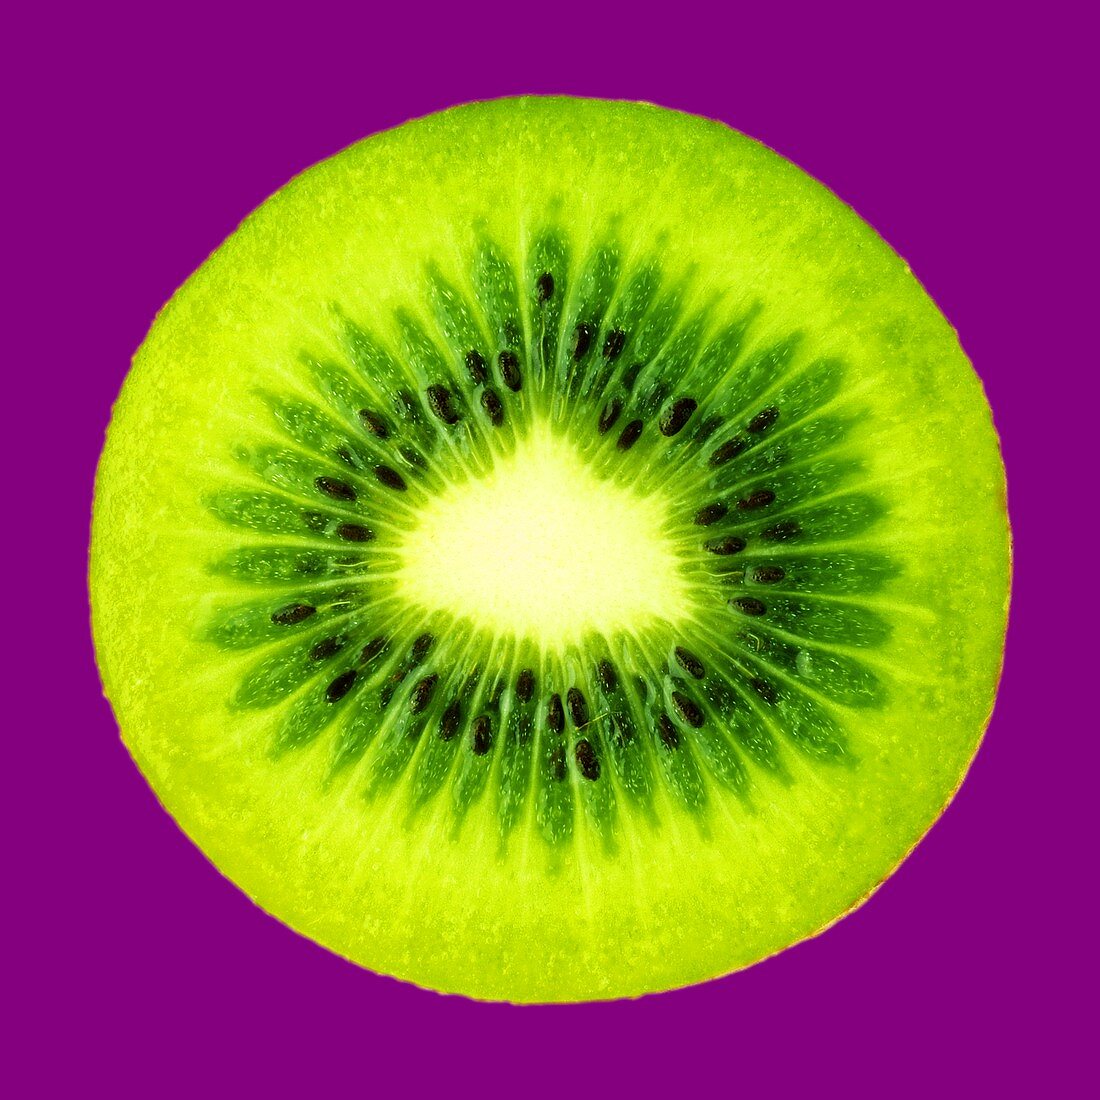 A slice of kiwi fruit with purple background